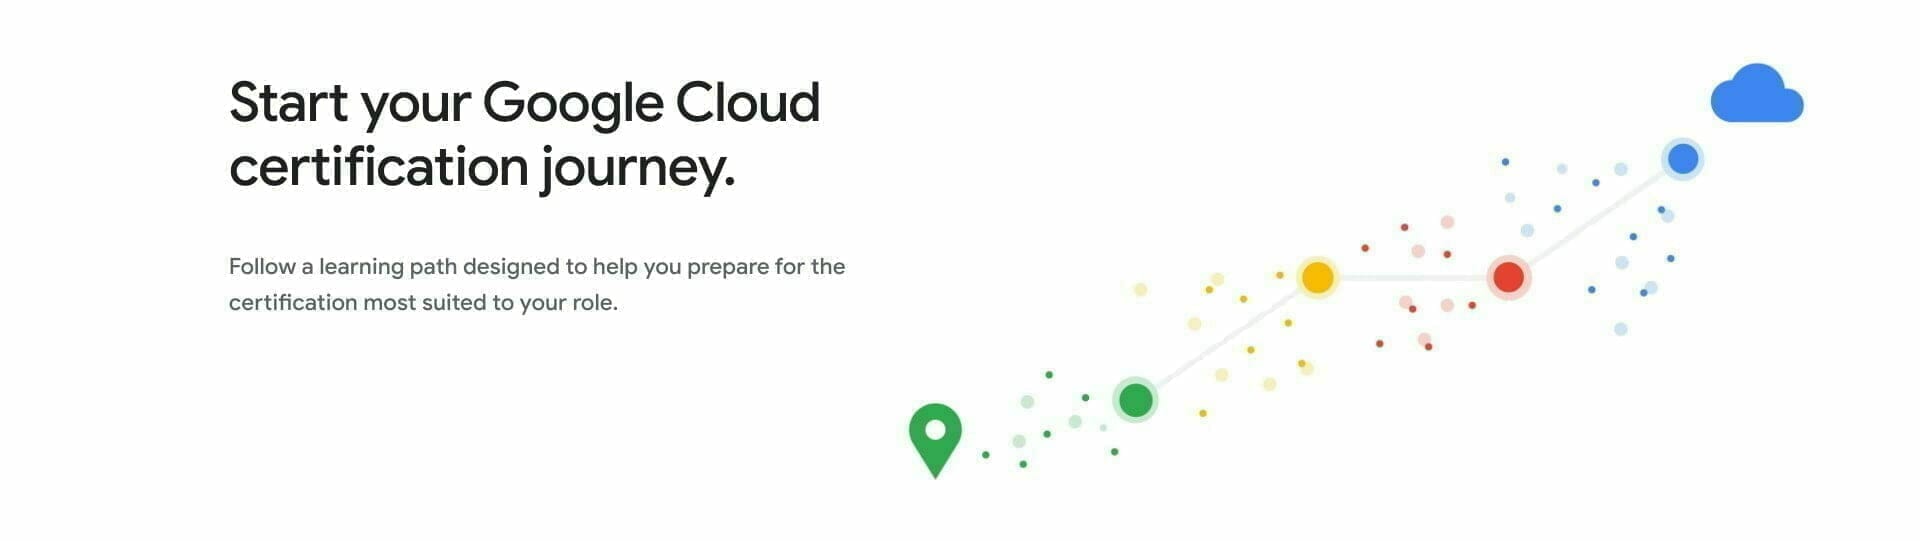 Start your Google Cloud certification journey.